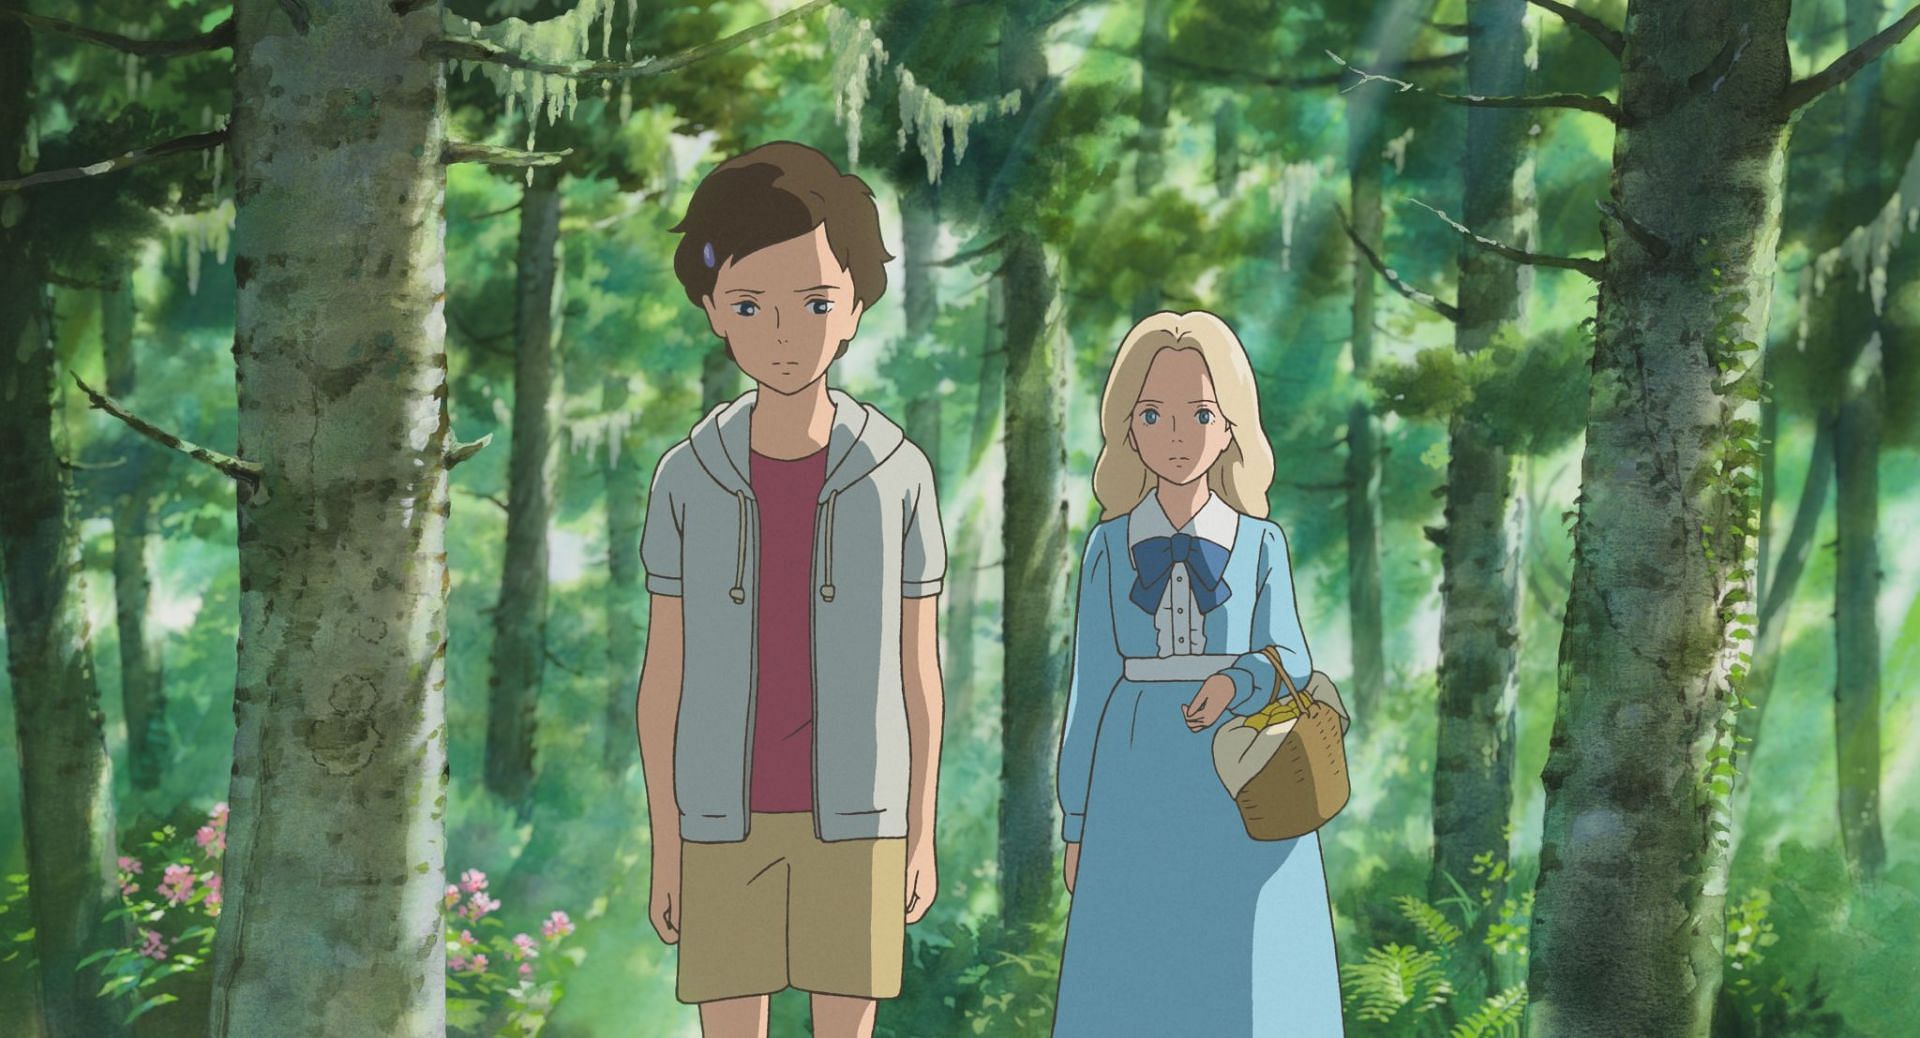 Anna and Marnie as seen in When Marnie Was There (Image credits: Hiromasa Yonebayashi/ Studio Ghibli/ Toho)